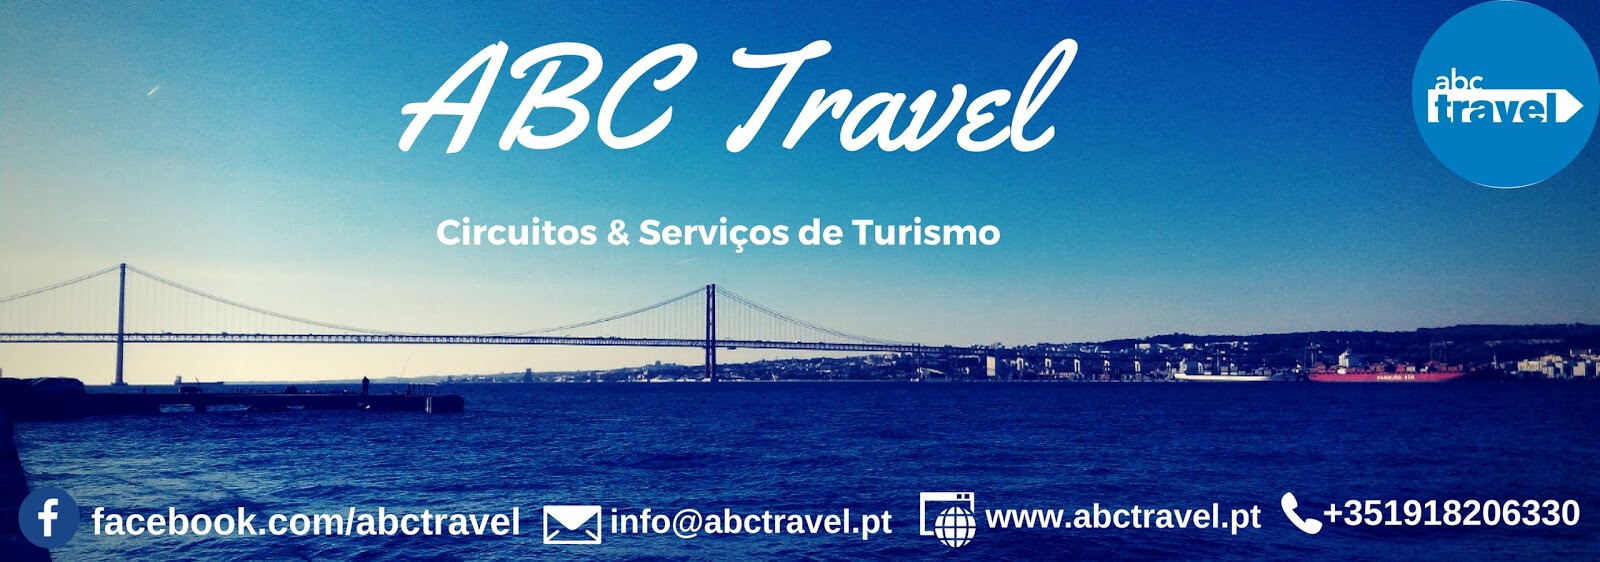 abc travel hotline